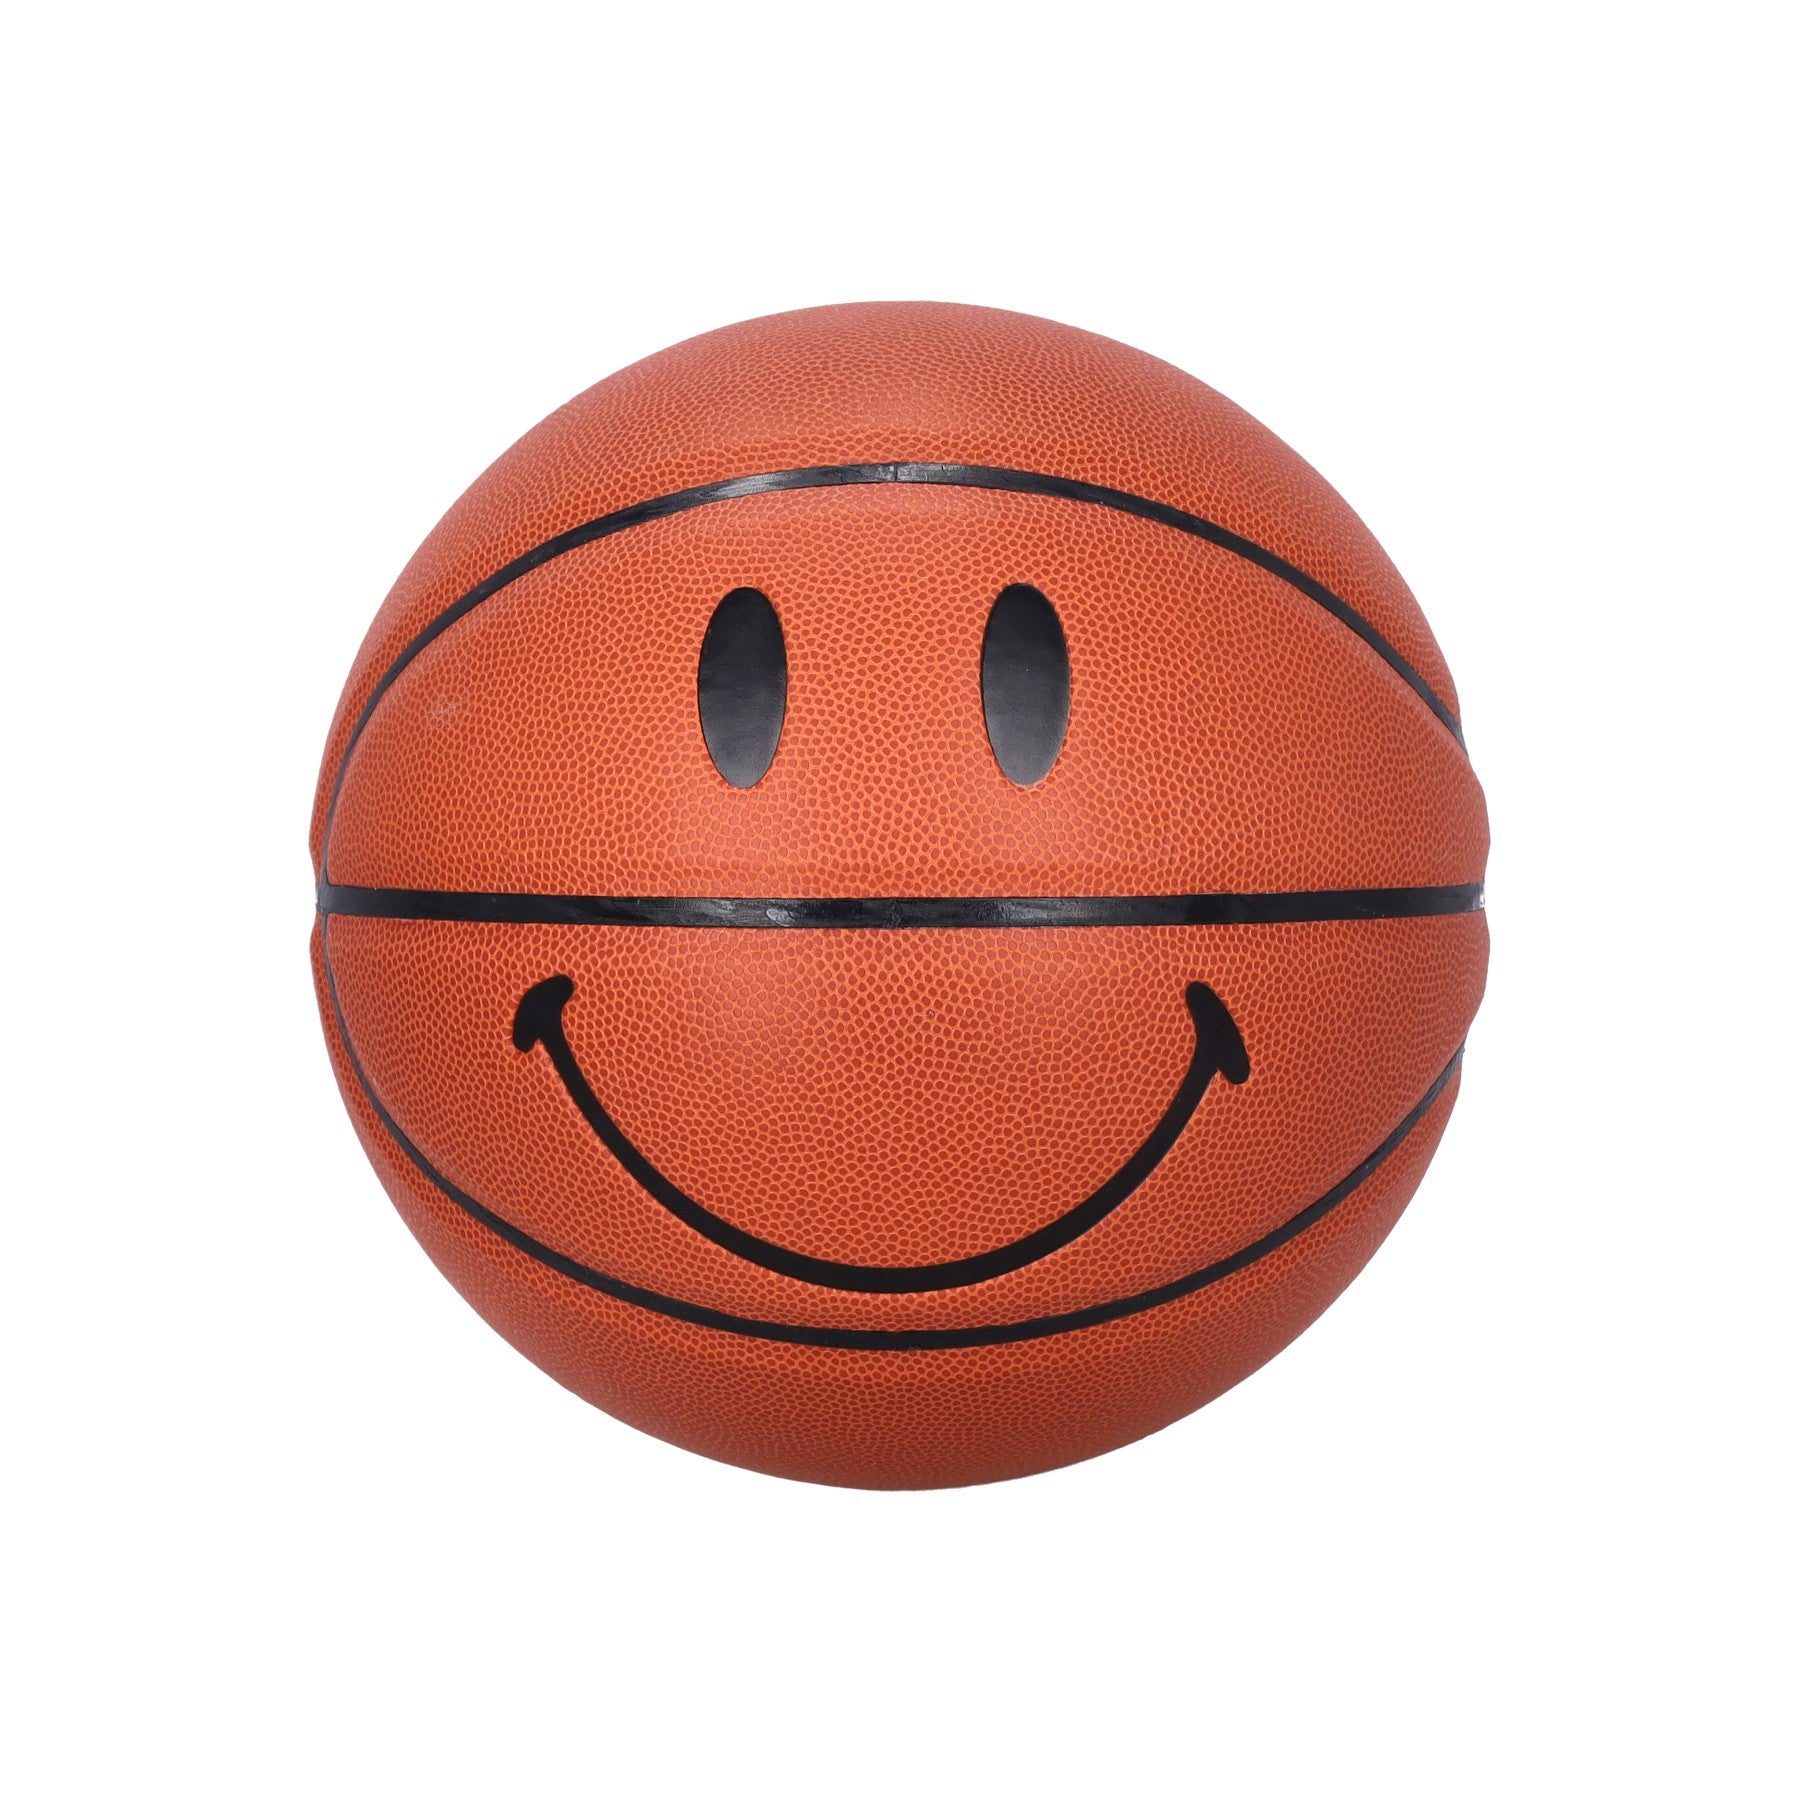 Market, Pallone Uomo Natural Size 7 Basketball X Smiley, 